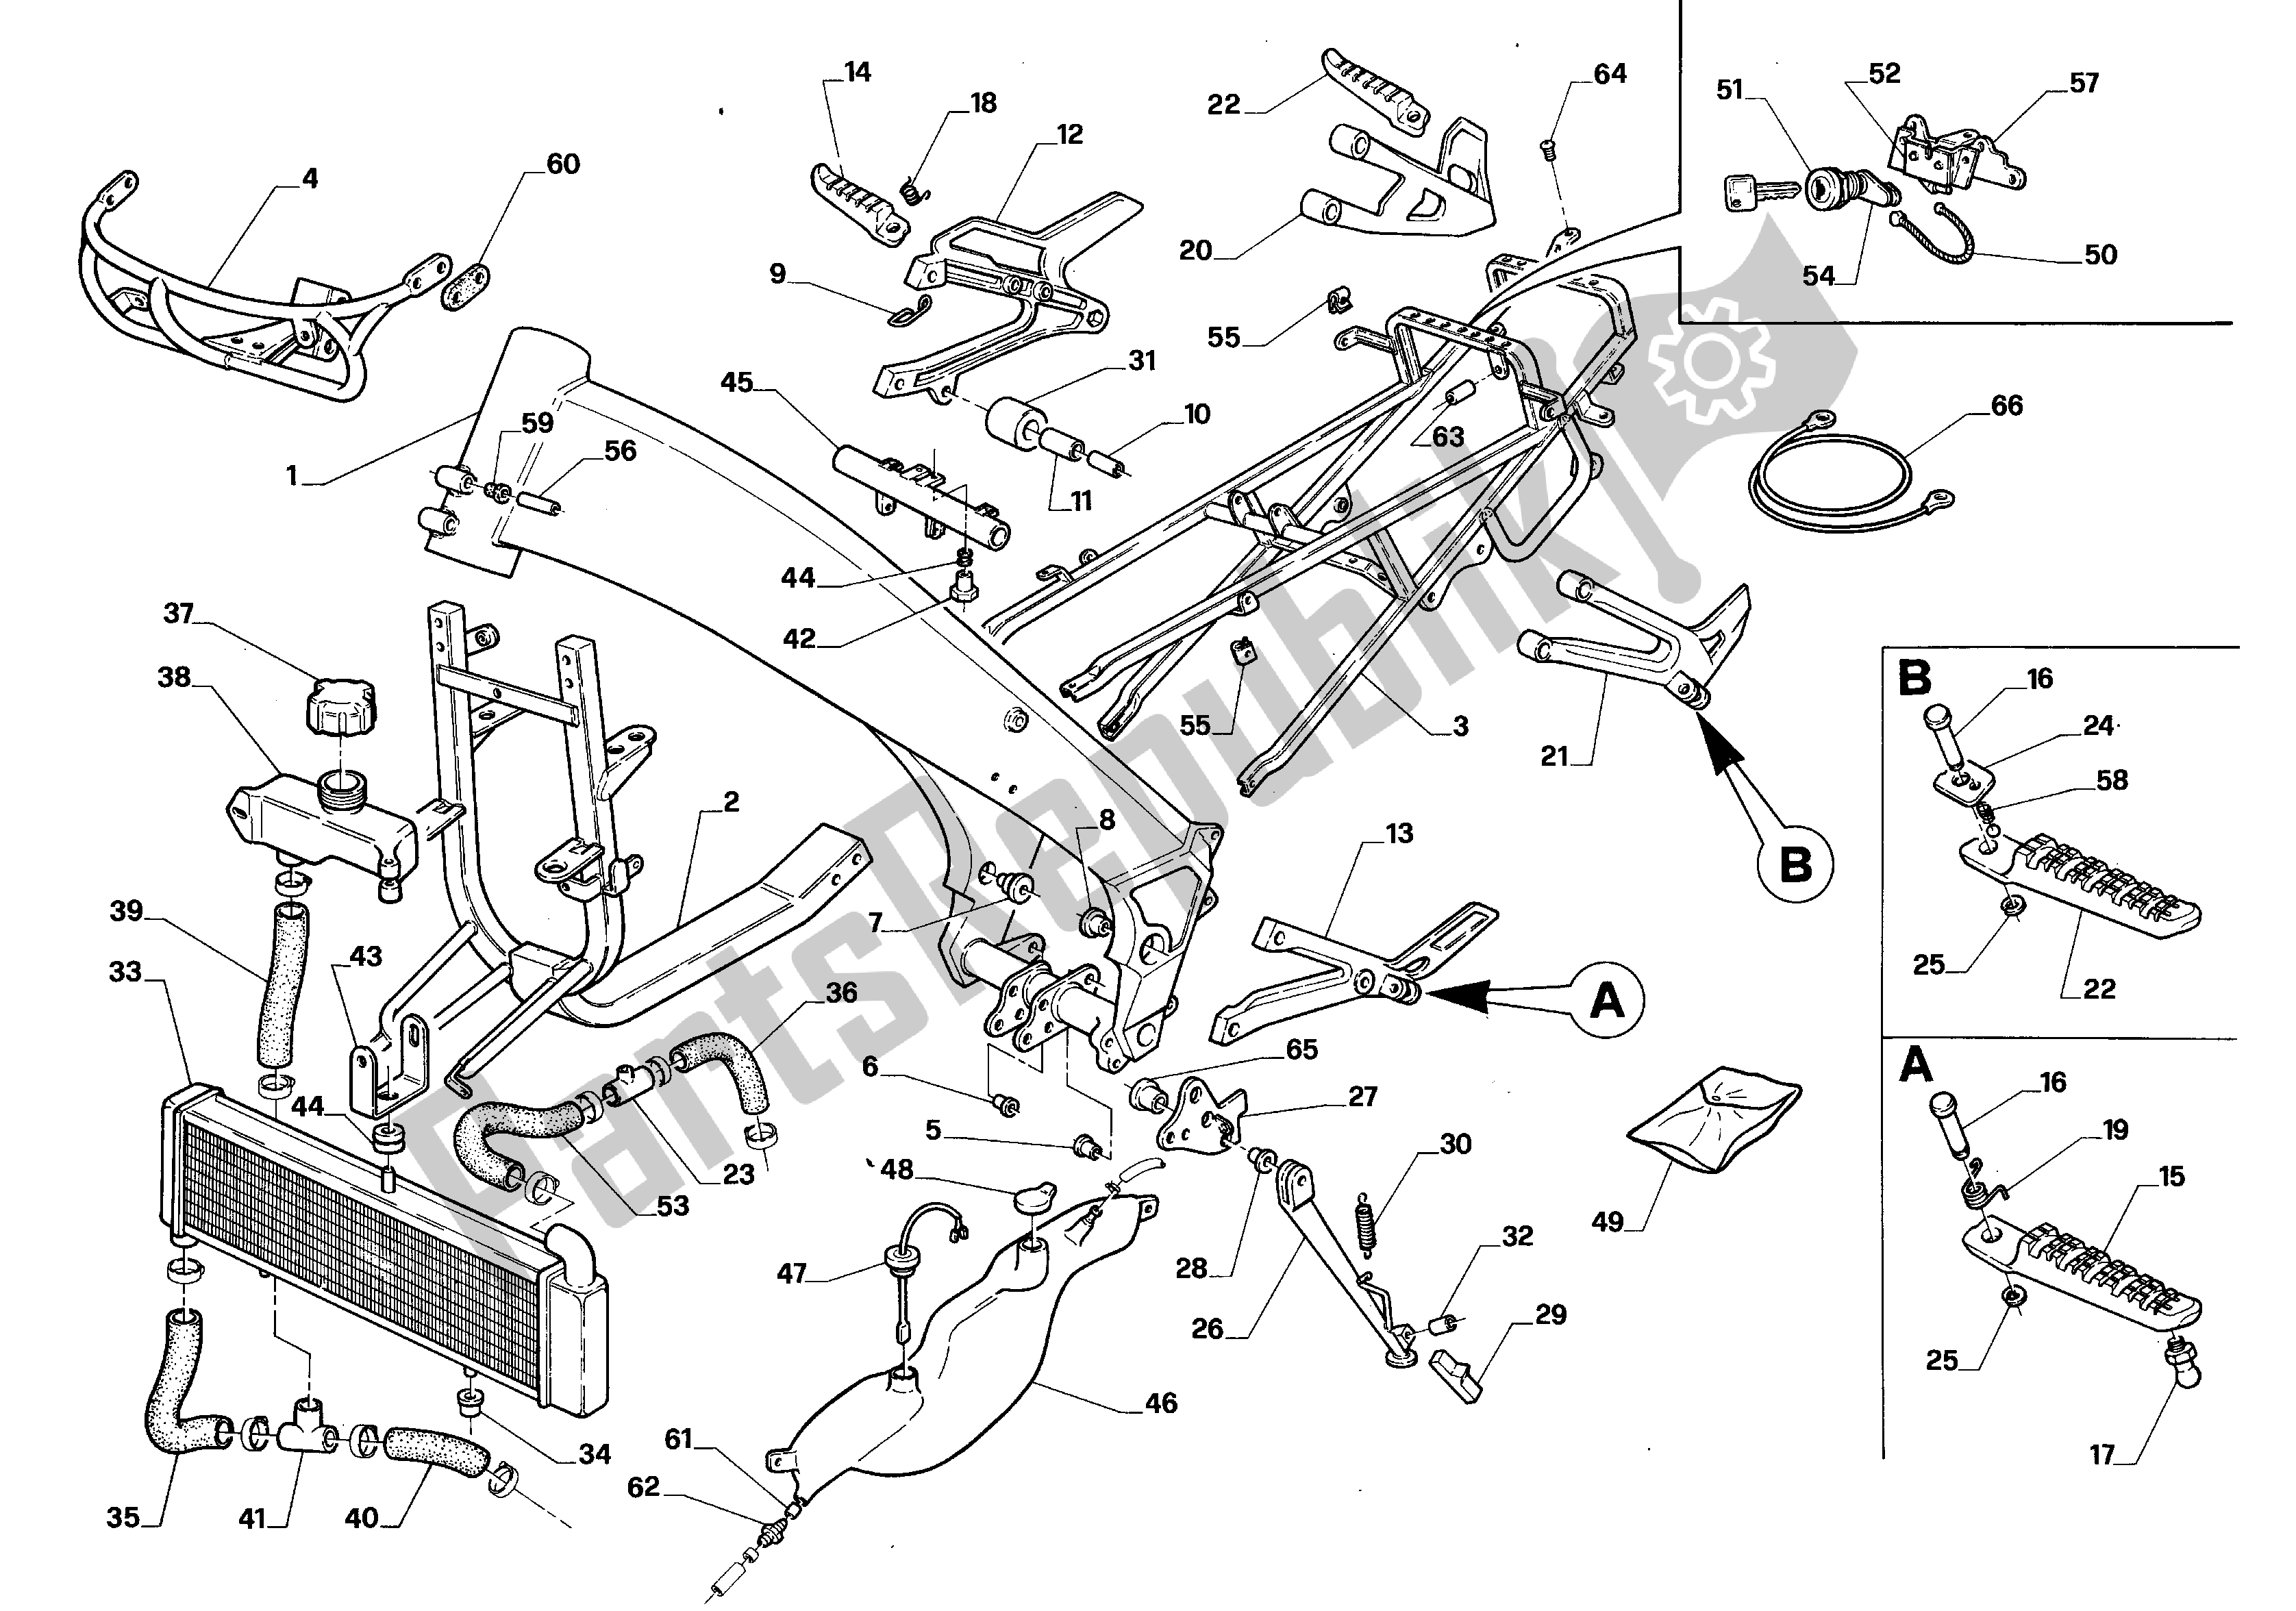 All parts for the Frame of the Aprilia AF1 125 1990